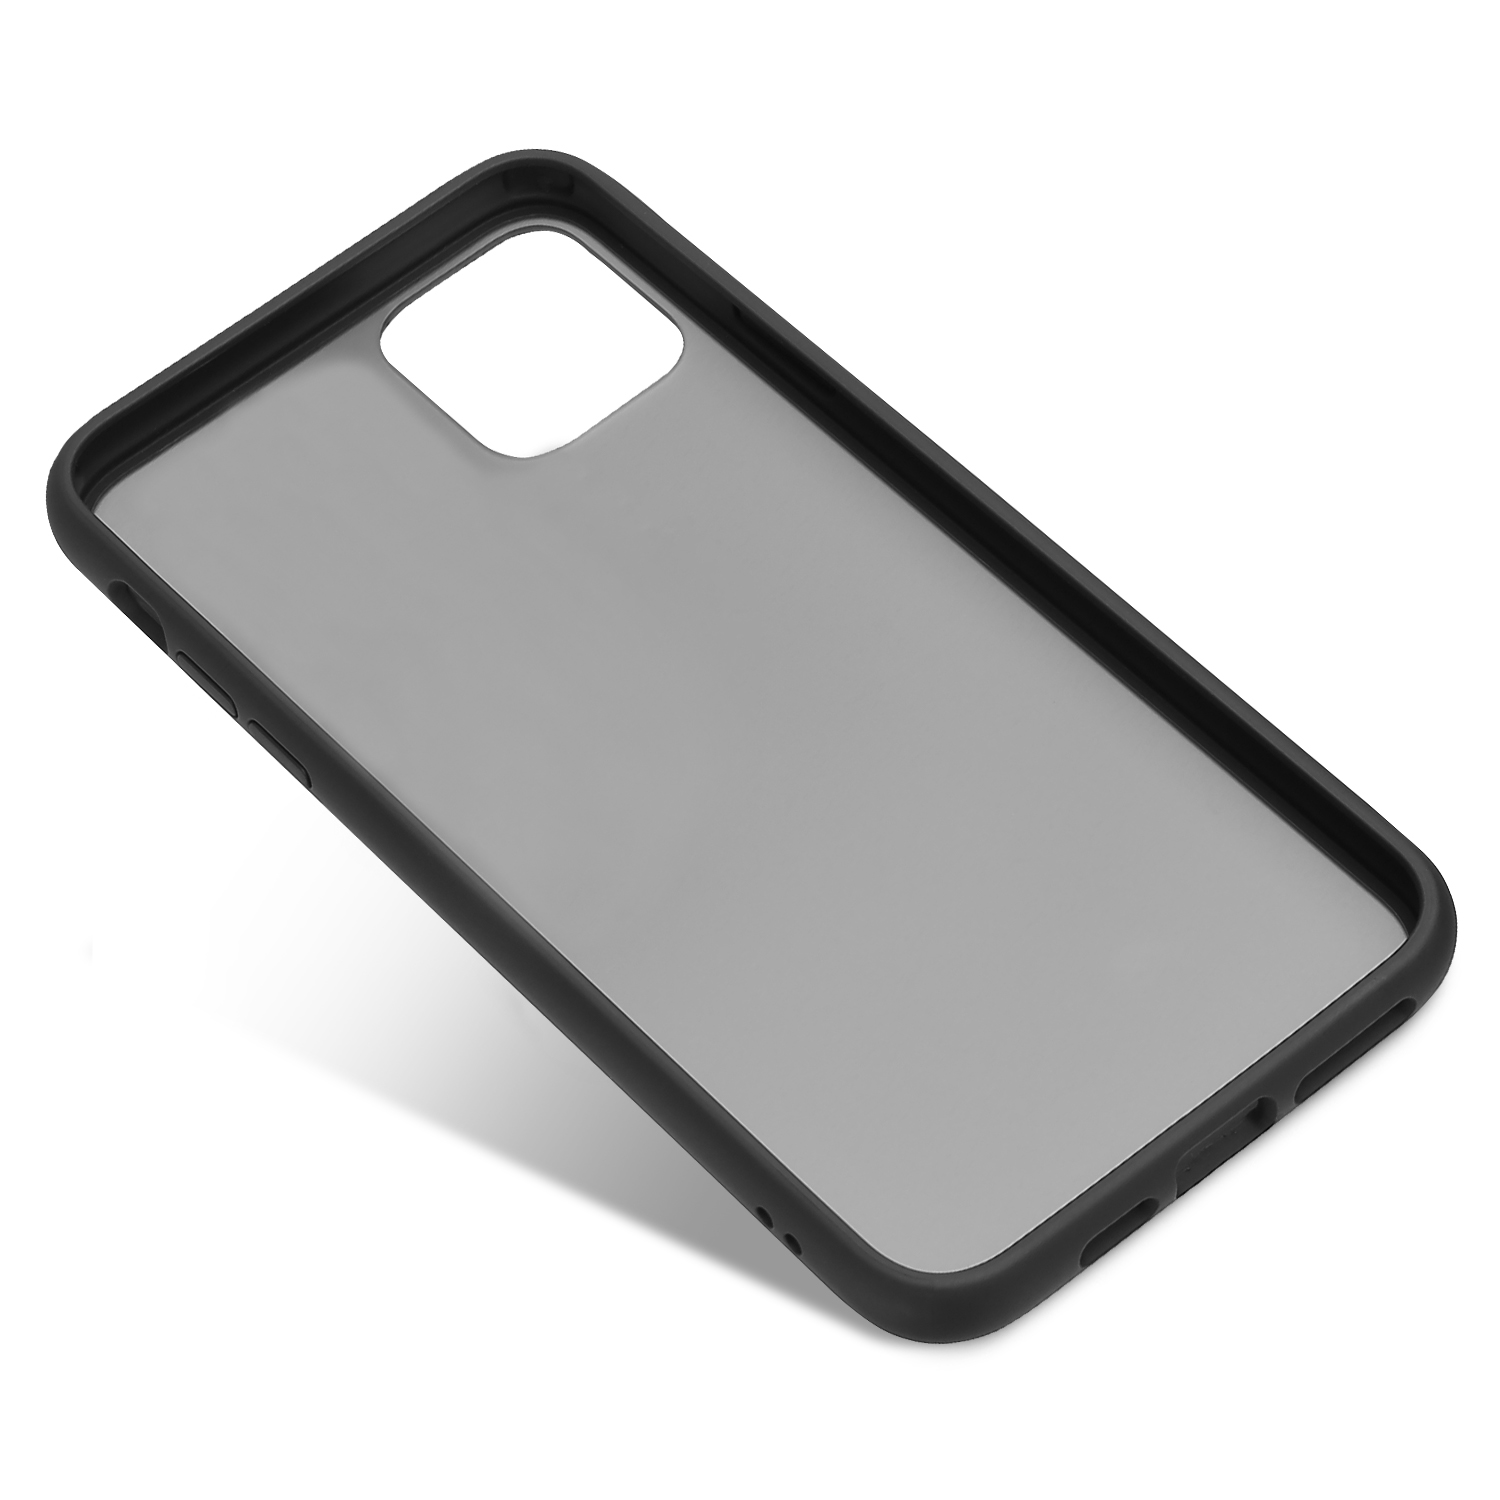 nevox StyleShell Invisio iPhone 11 Pro Max schwarz transparent